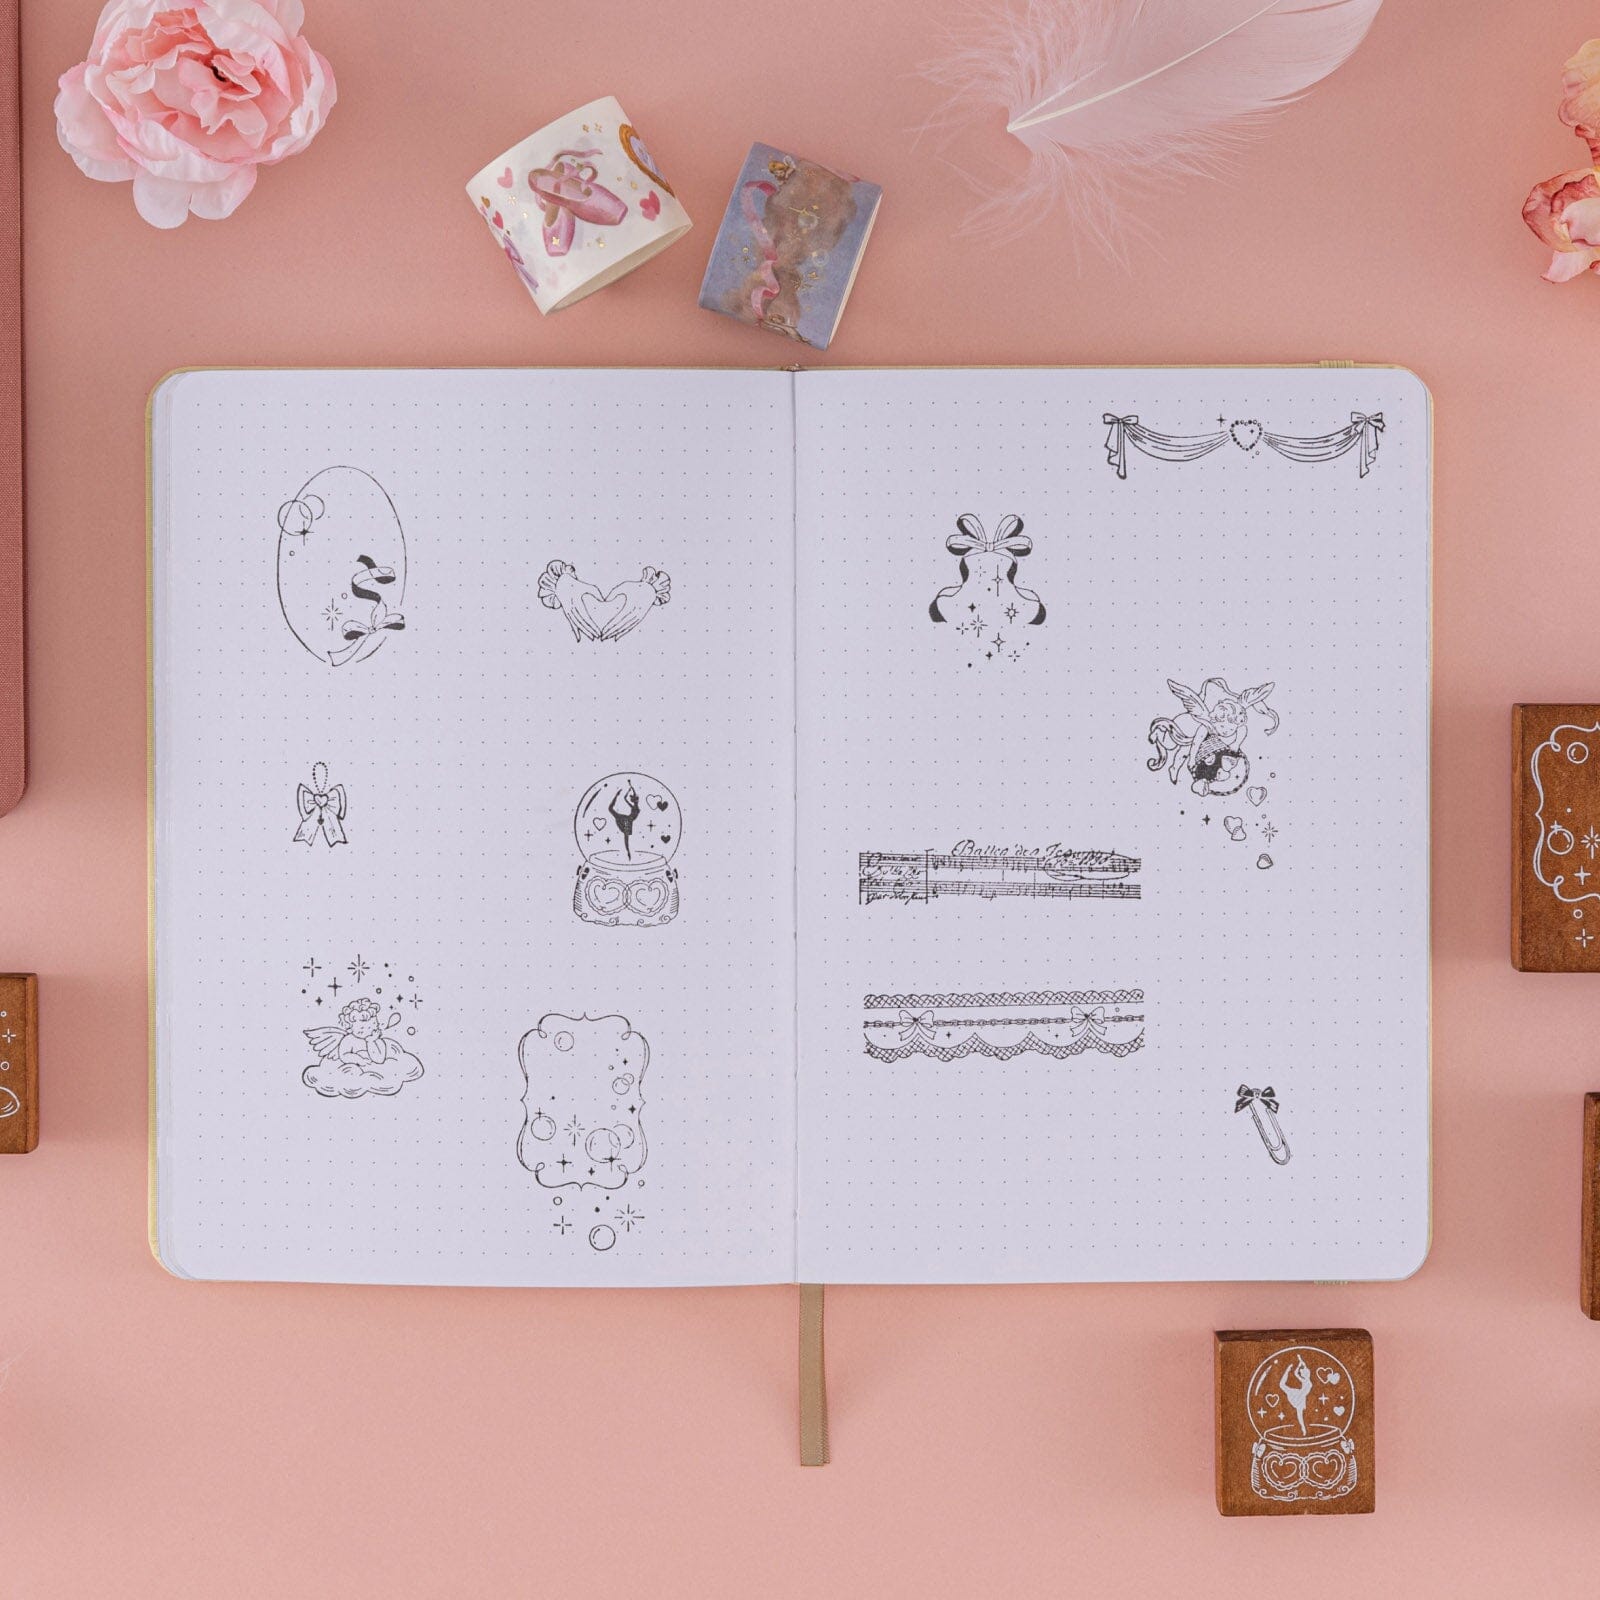 Tsuki ‘Our Stories’ Reading Journal Stamp Set ☾